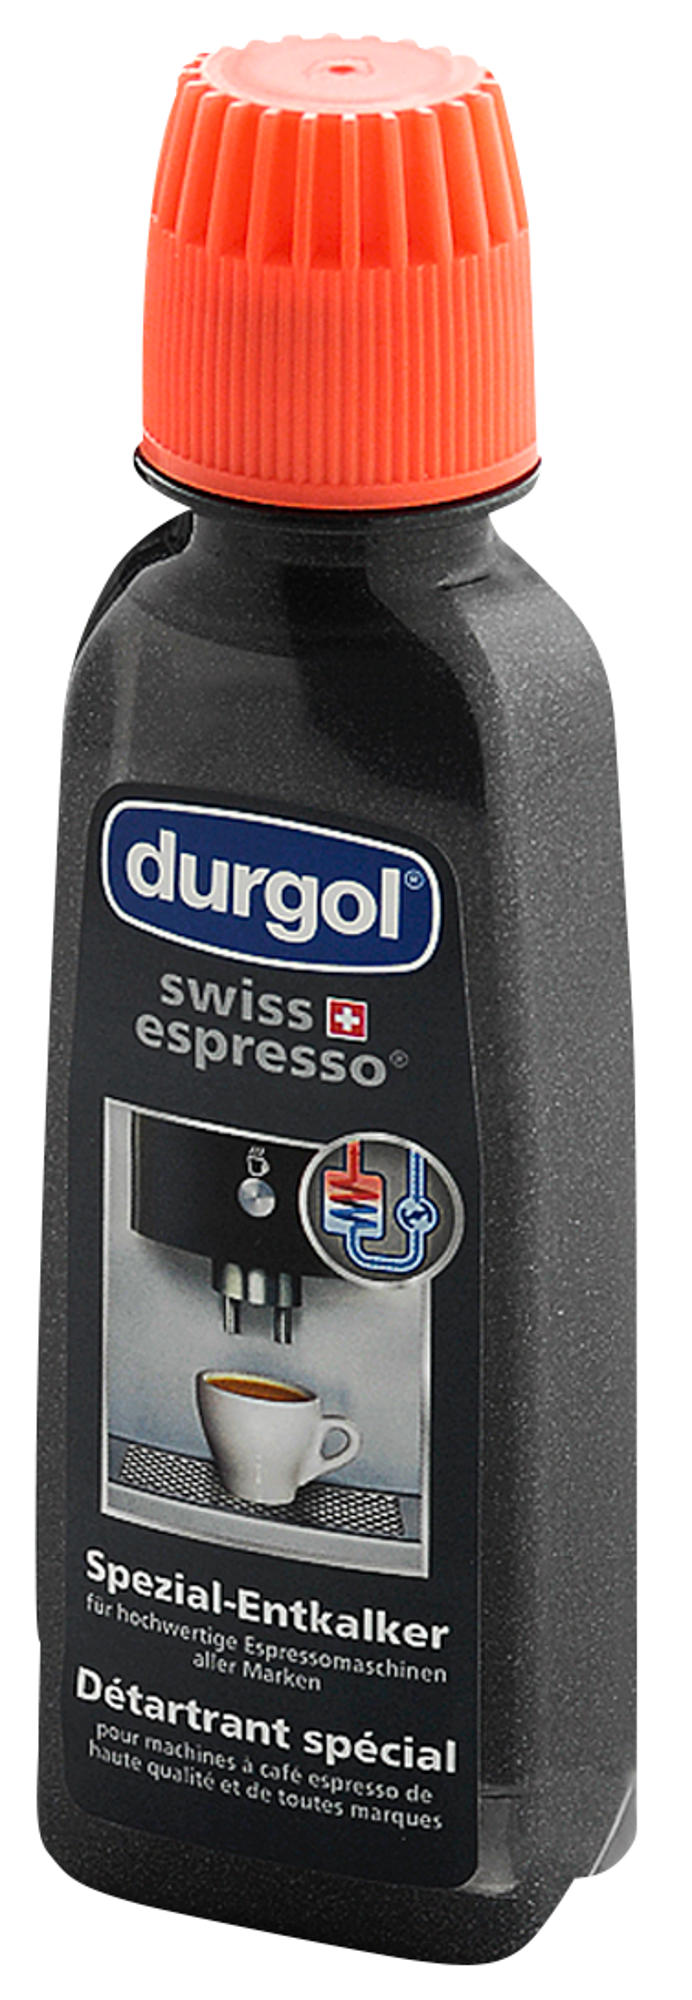 DURGOL swiss espresso Entkalker